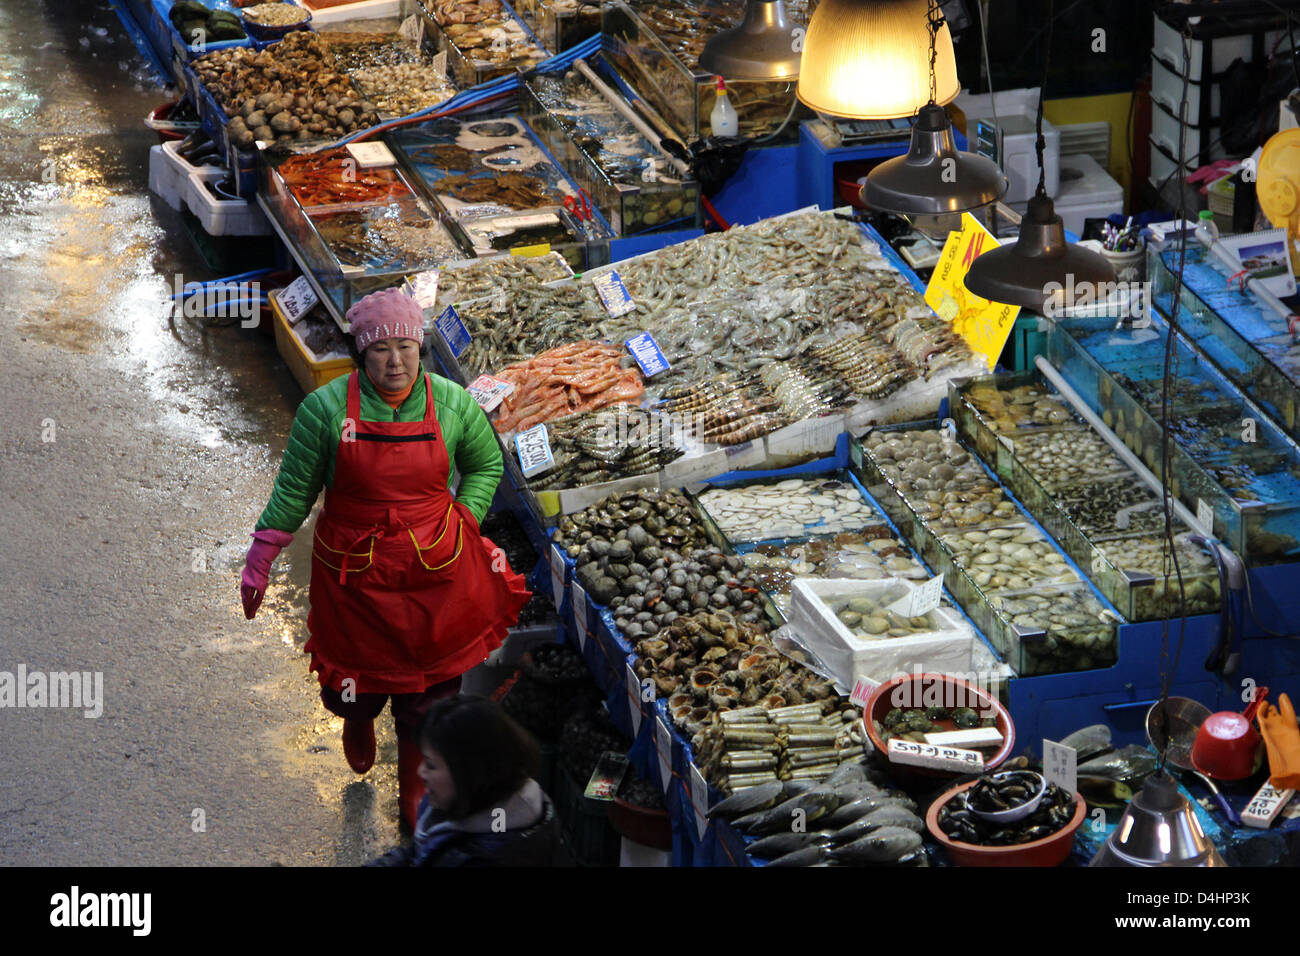 Corea del Sur: Mercado Mayorista Pesquero Noryangjin, Seúl Foto de stock